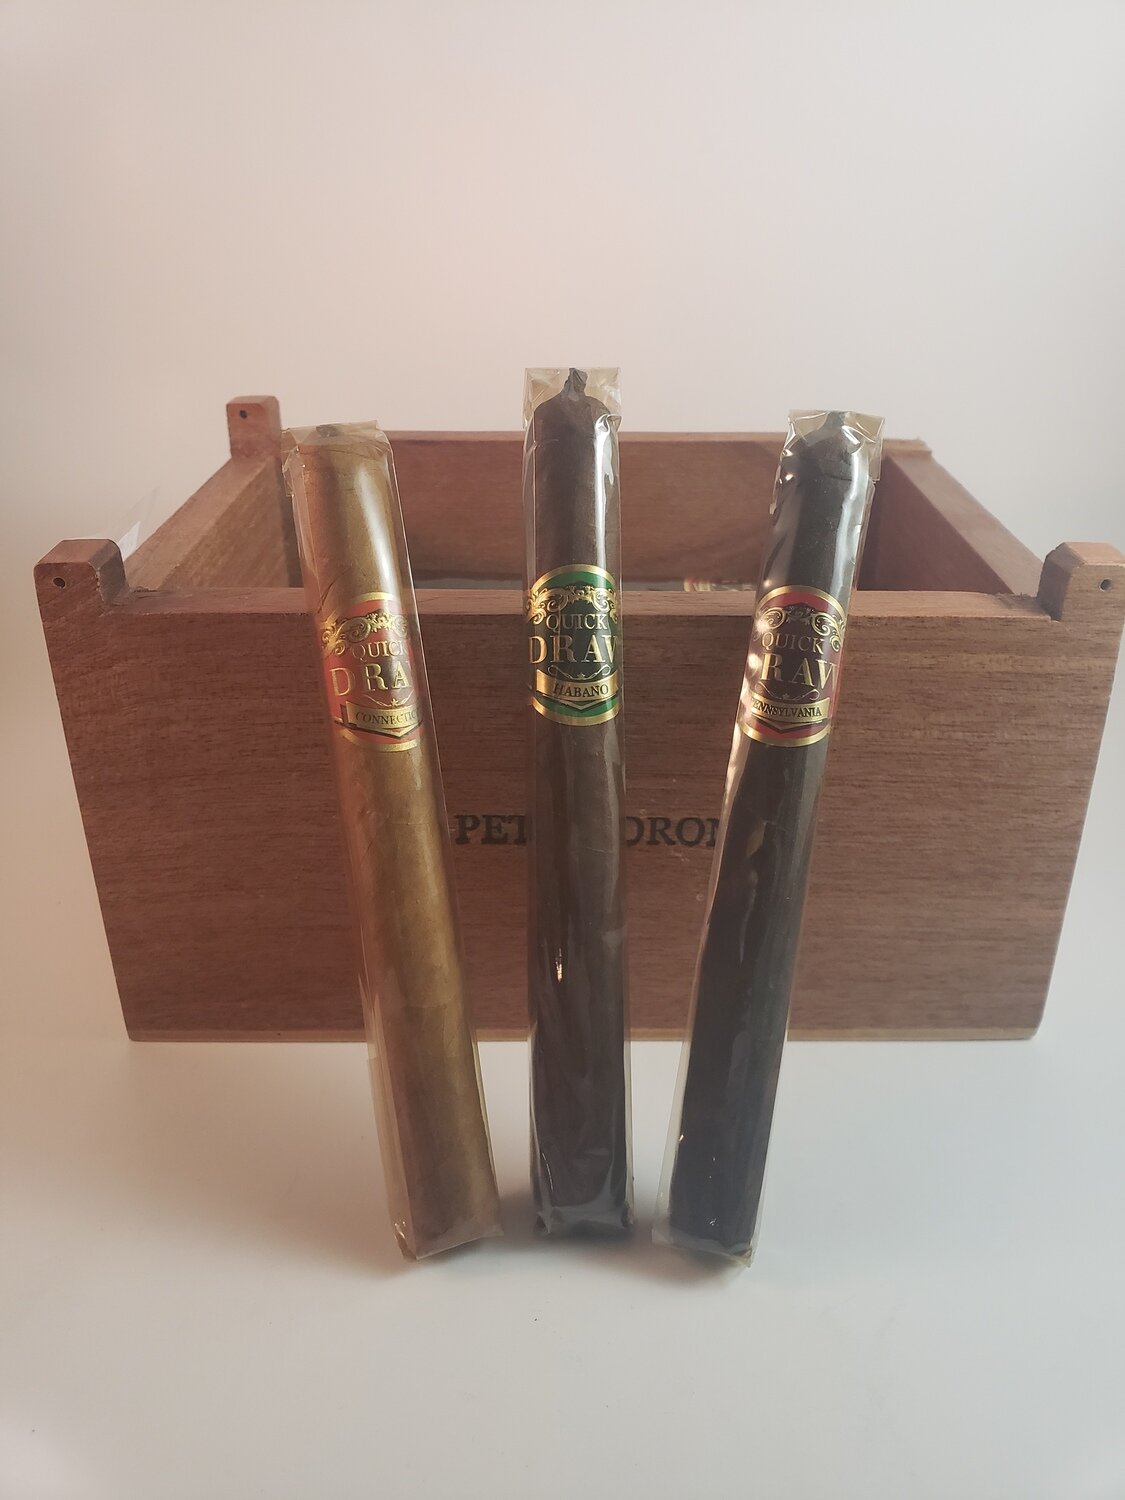 Southern Draw Quickdraw Habano Corona Gorda 5 x 46 Single Cigar